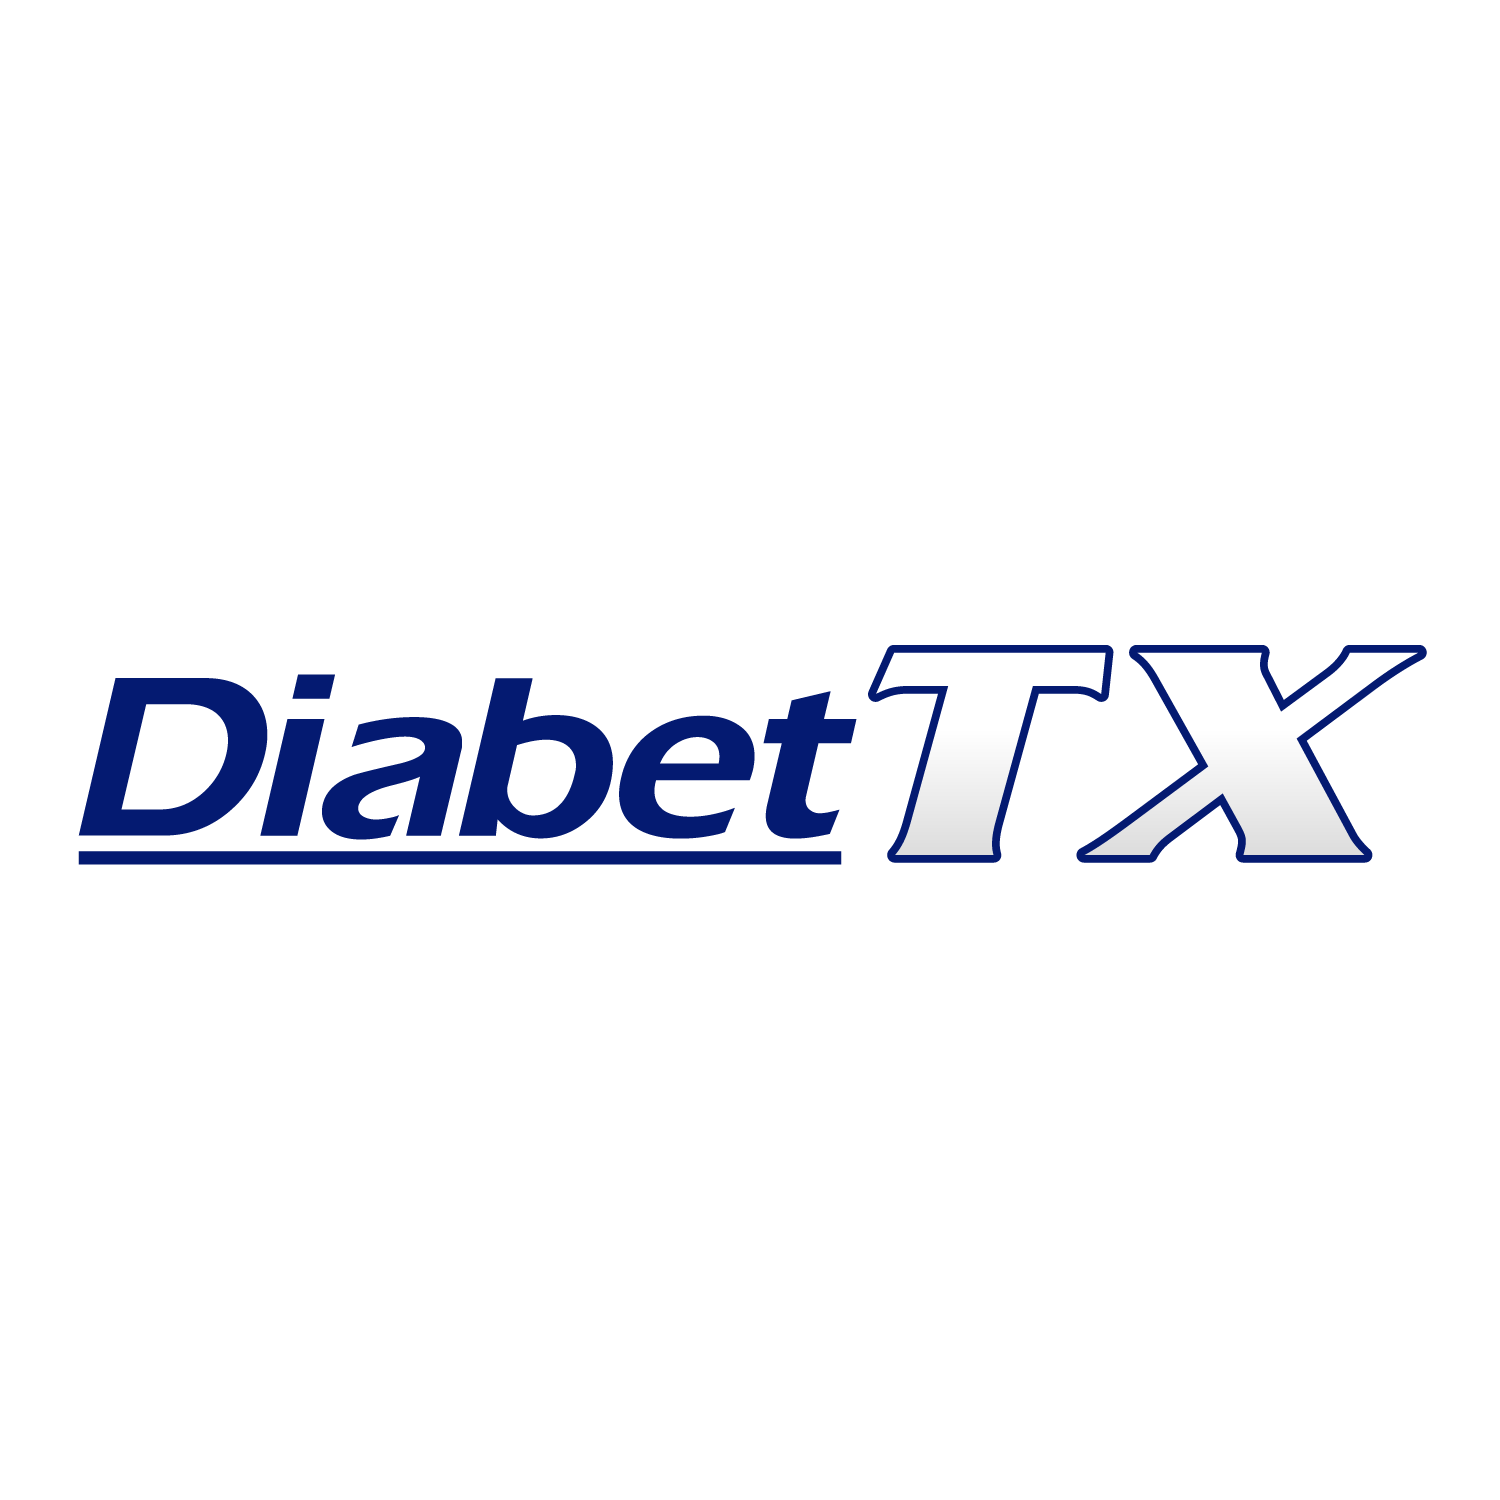 DiabetTX